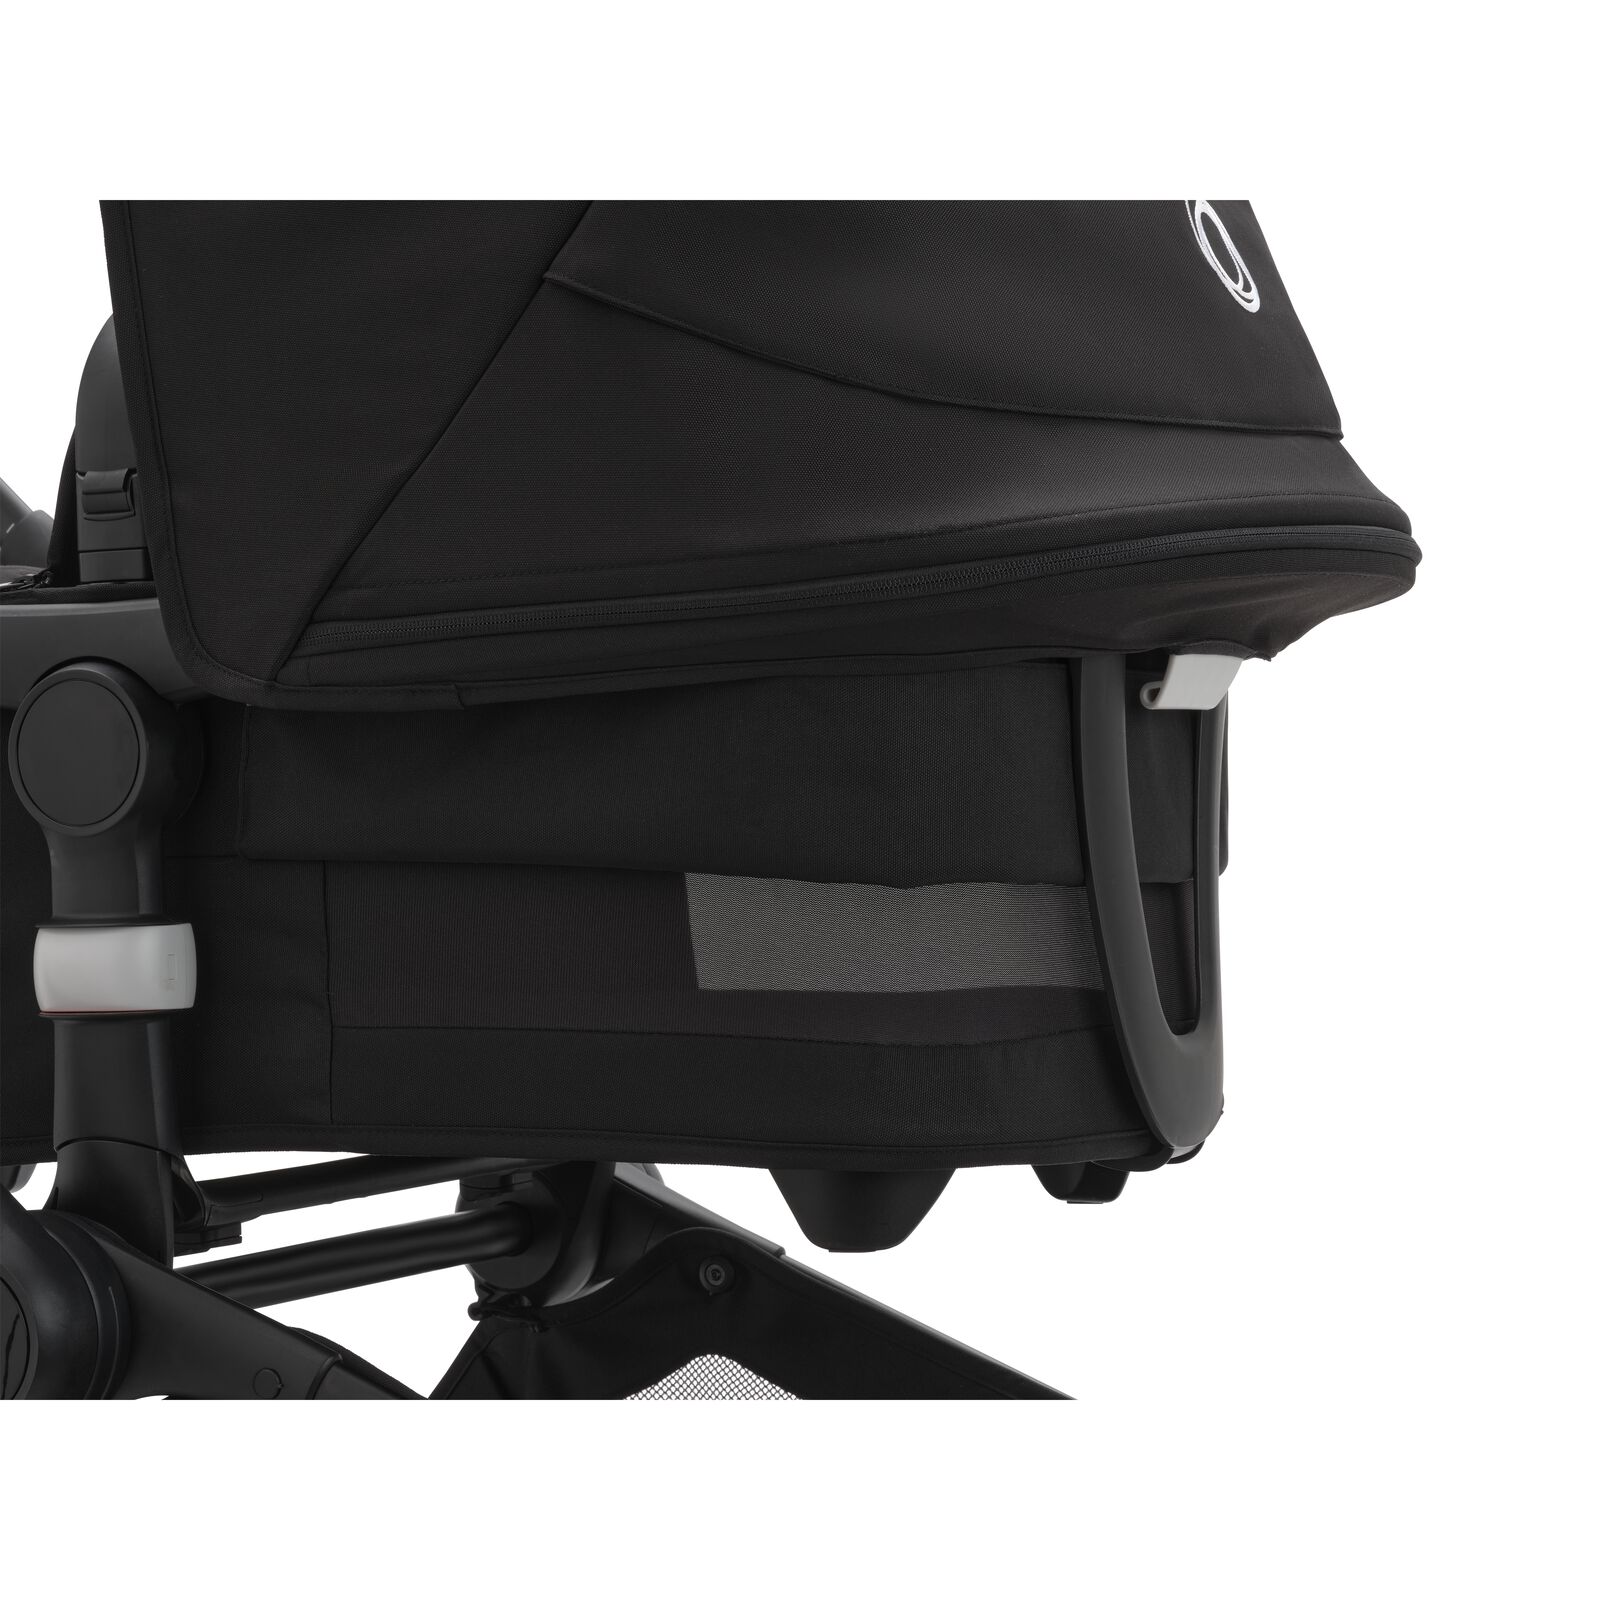 Bugaboo-Fox-5-bassinet-seat-stroller-black-chassis-midnight-black-fabrics-midnight-black-sun-canopy-x-PV006272-11